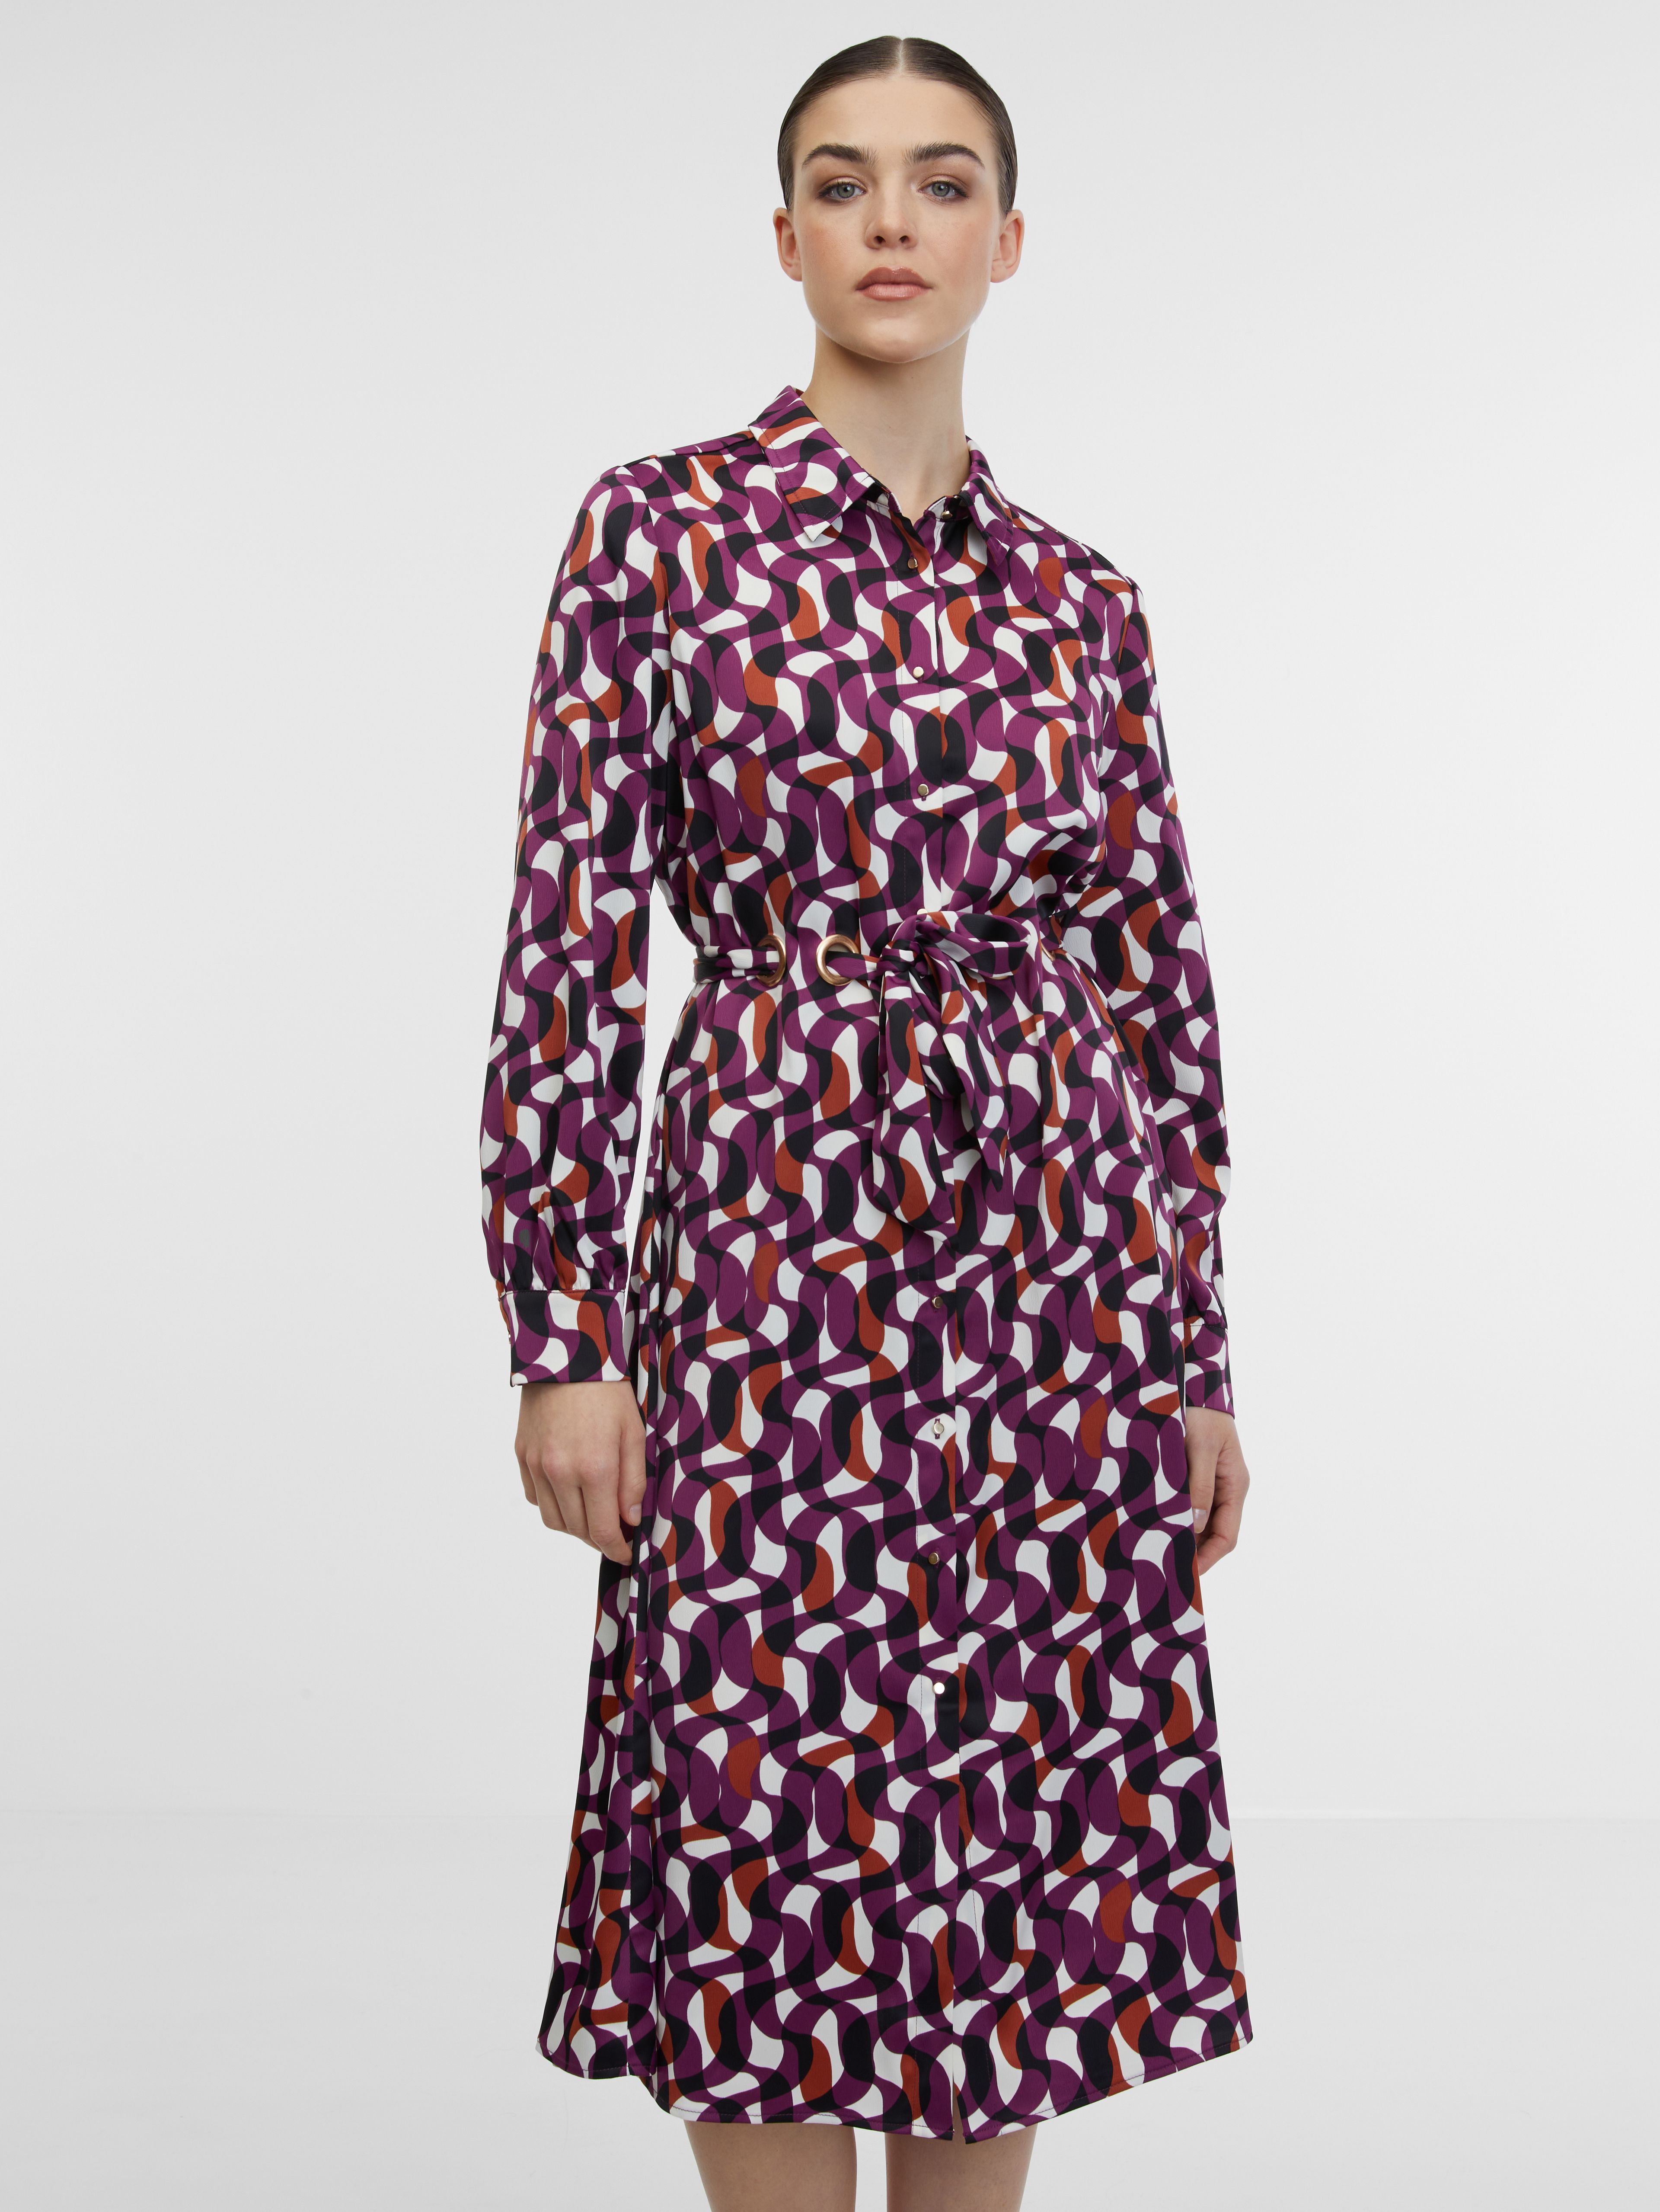 Fioletowa damska wzorzysta sukienka koszulowa ORSAY